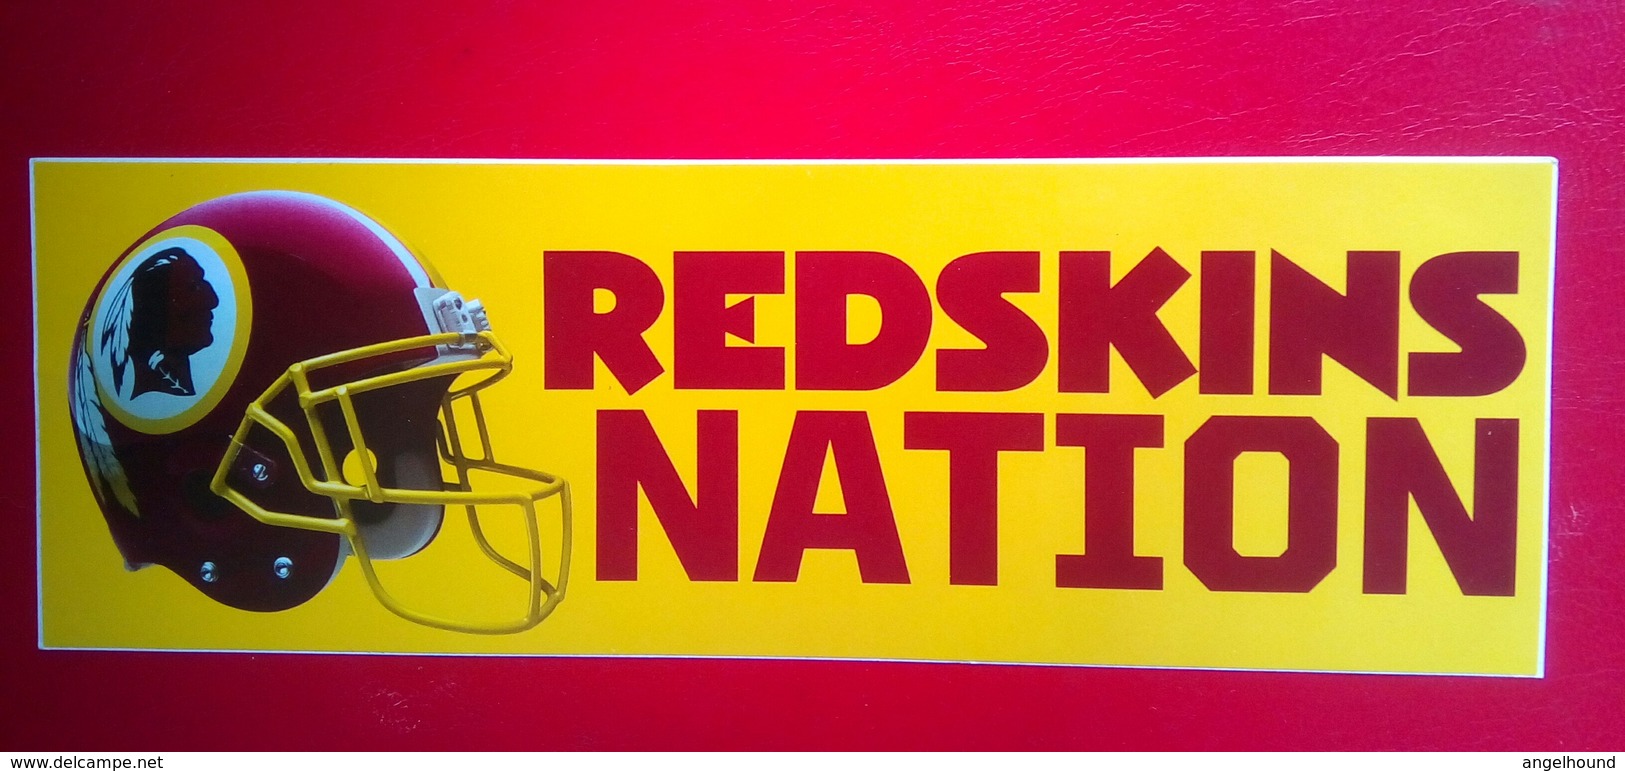 Redskins Nation - Washington Redskins